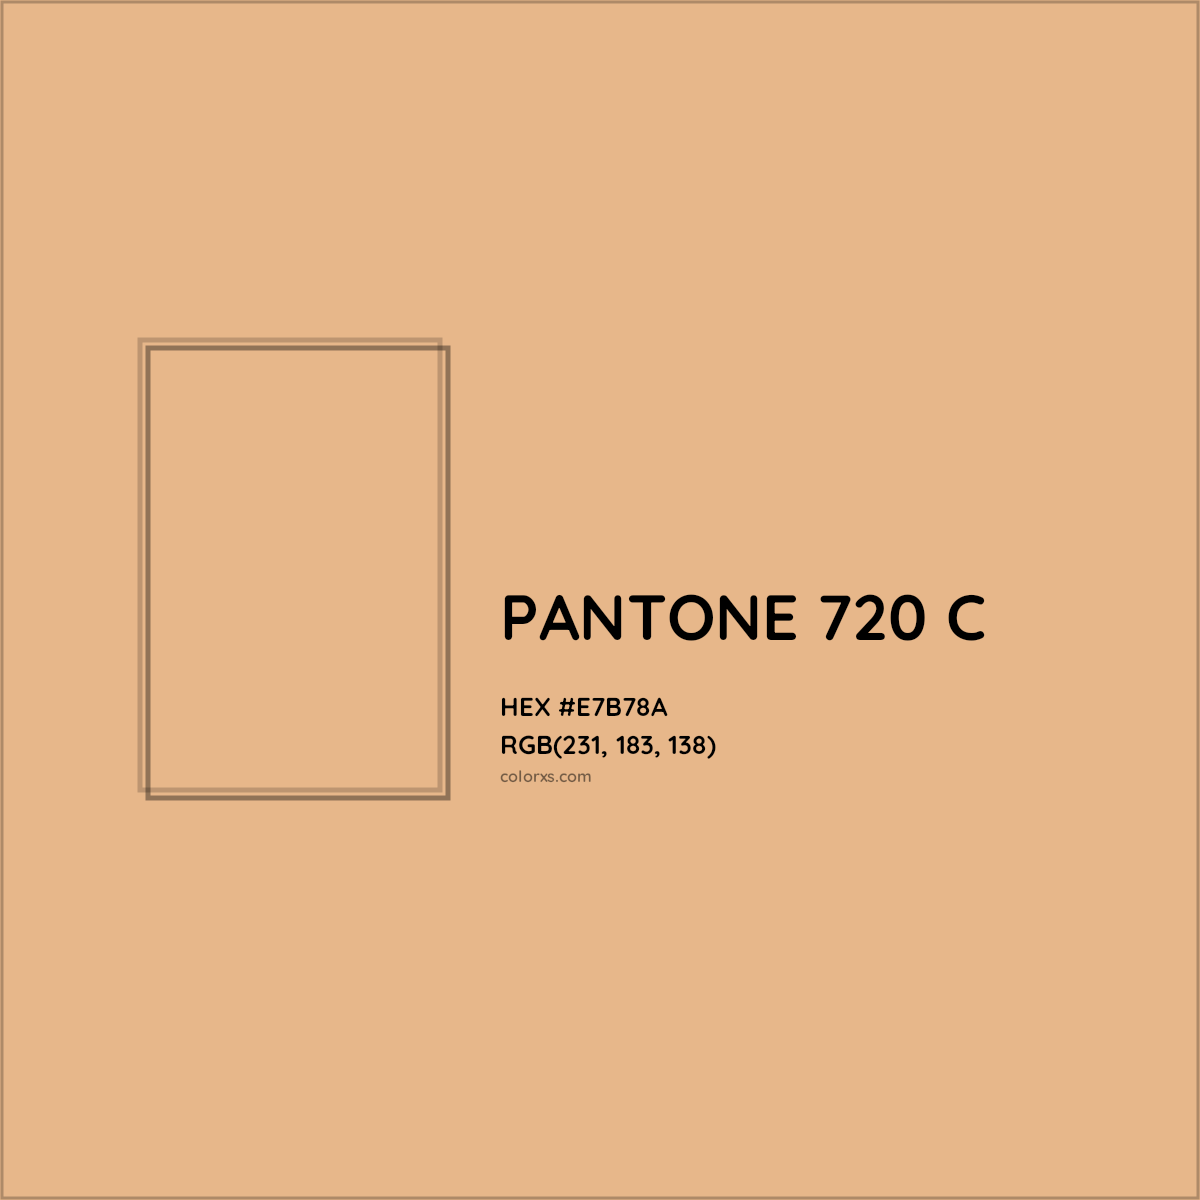 HEX #E7B78A PANTONE 720 C CMS Pantone PMS - Color Code